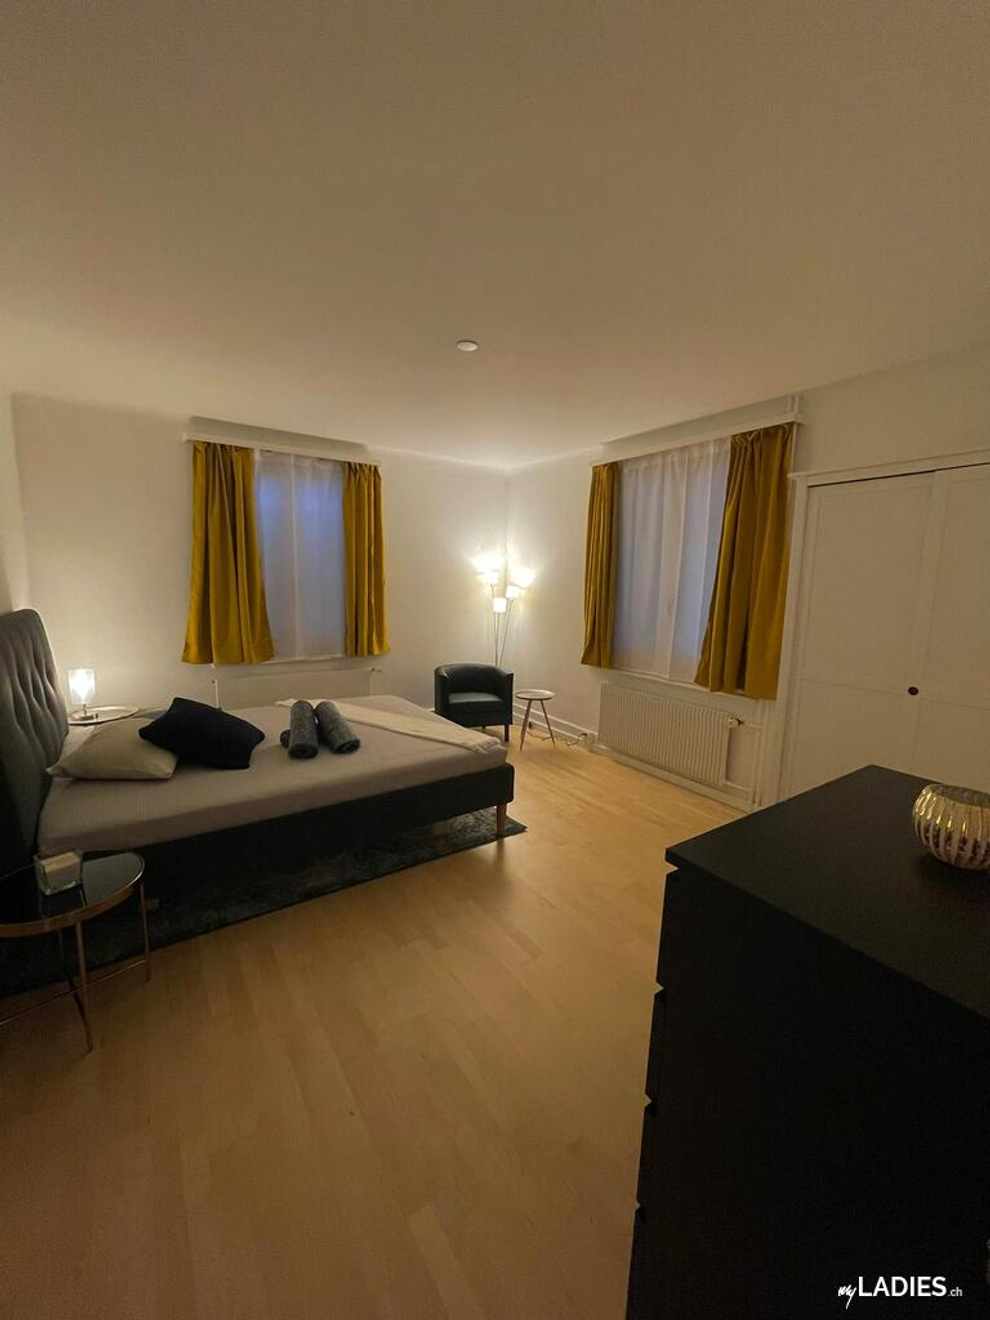 Zimmer / Rooms / Habitaciones in Muttenz BL / Bild 5